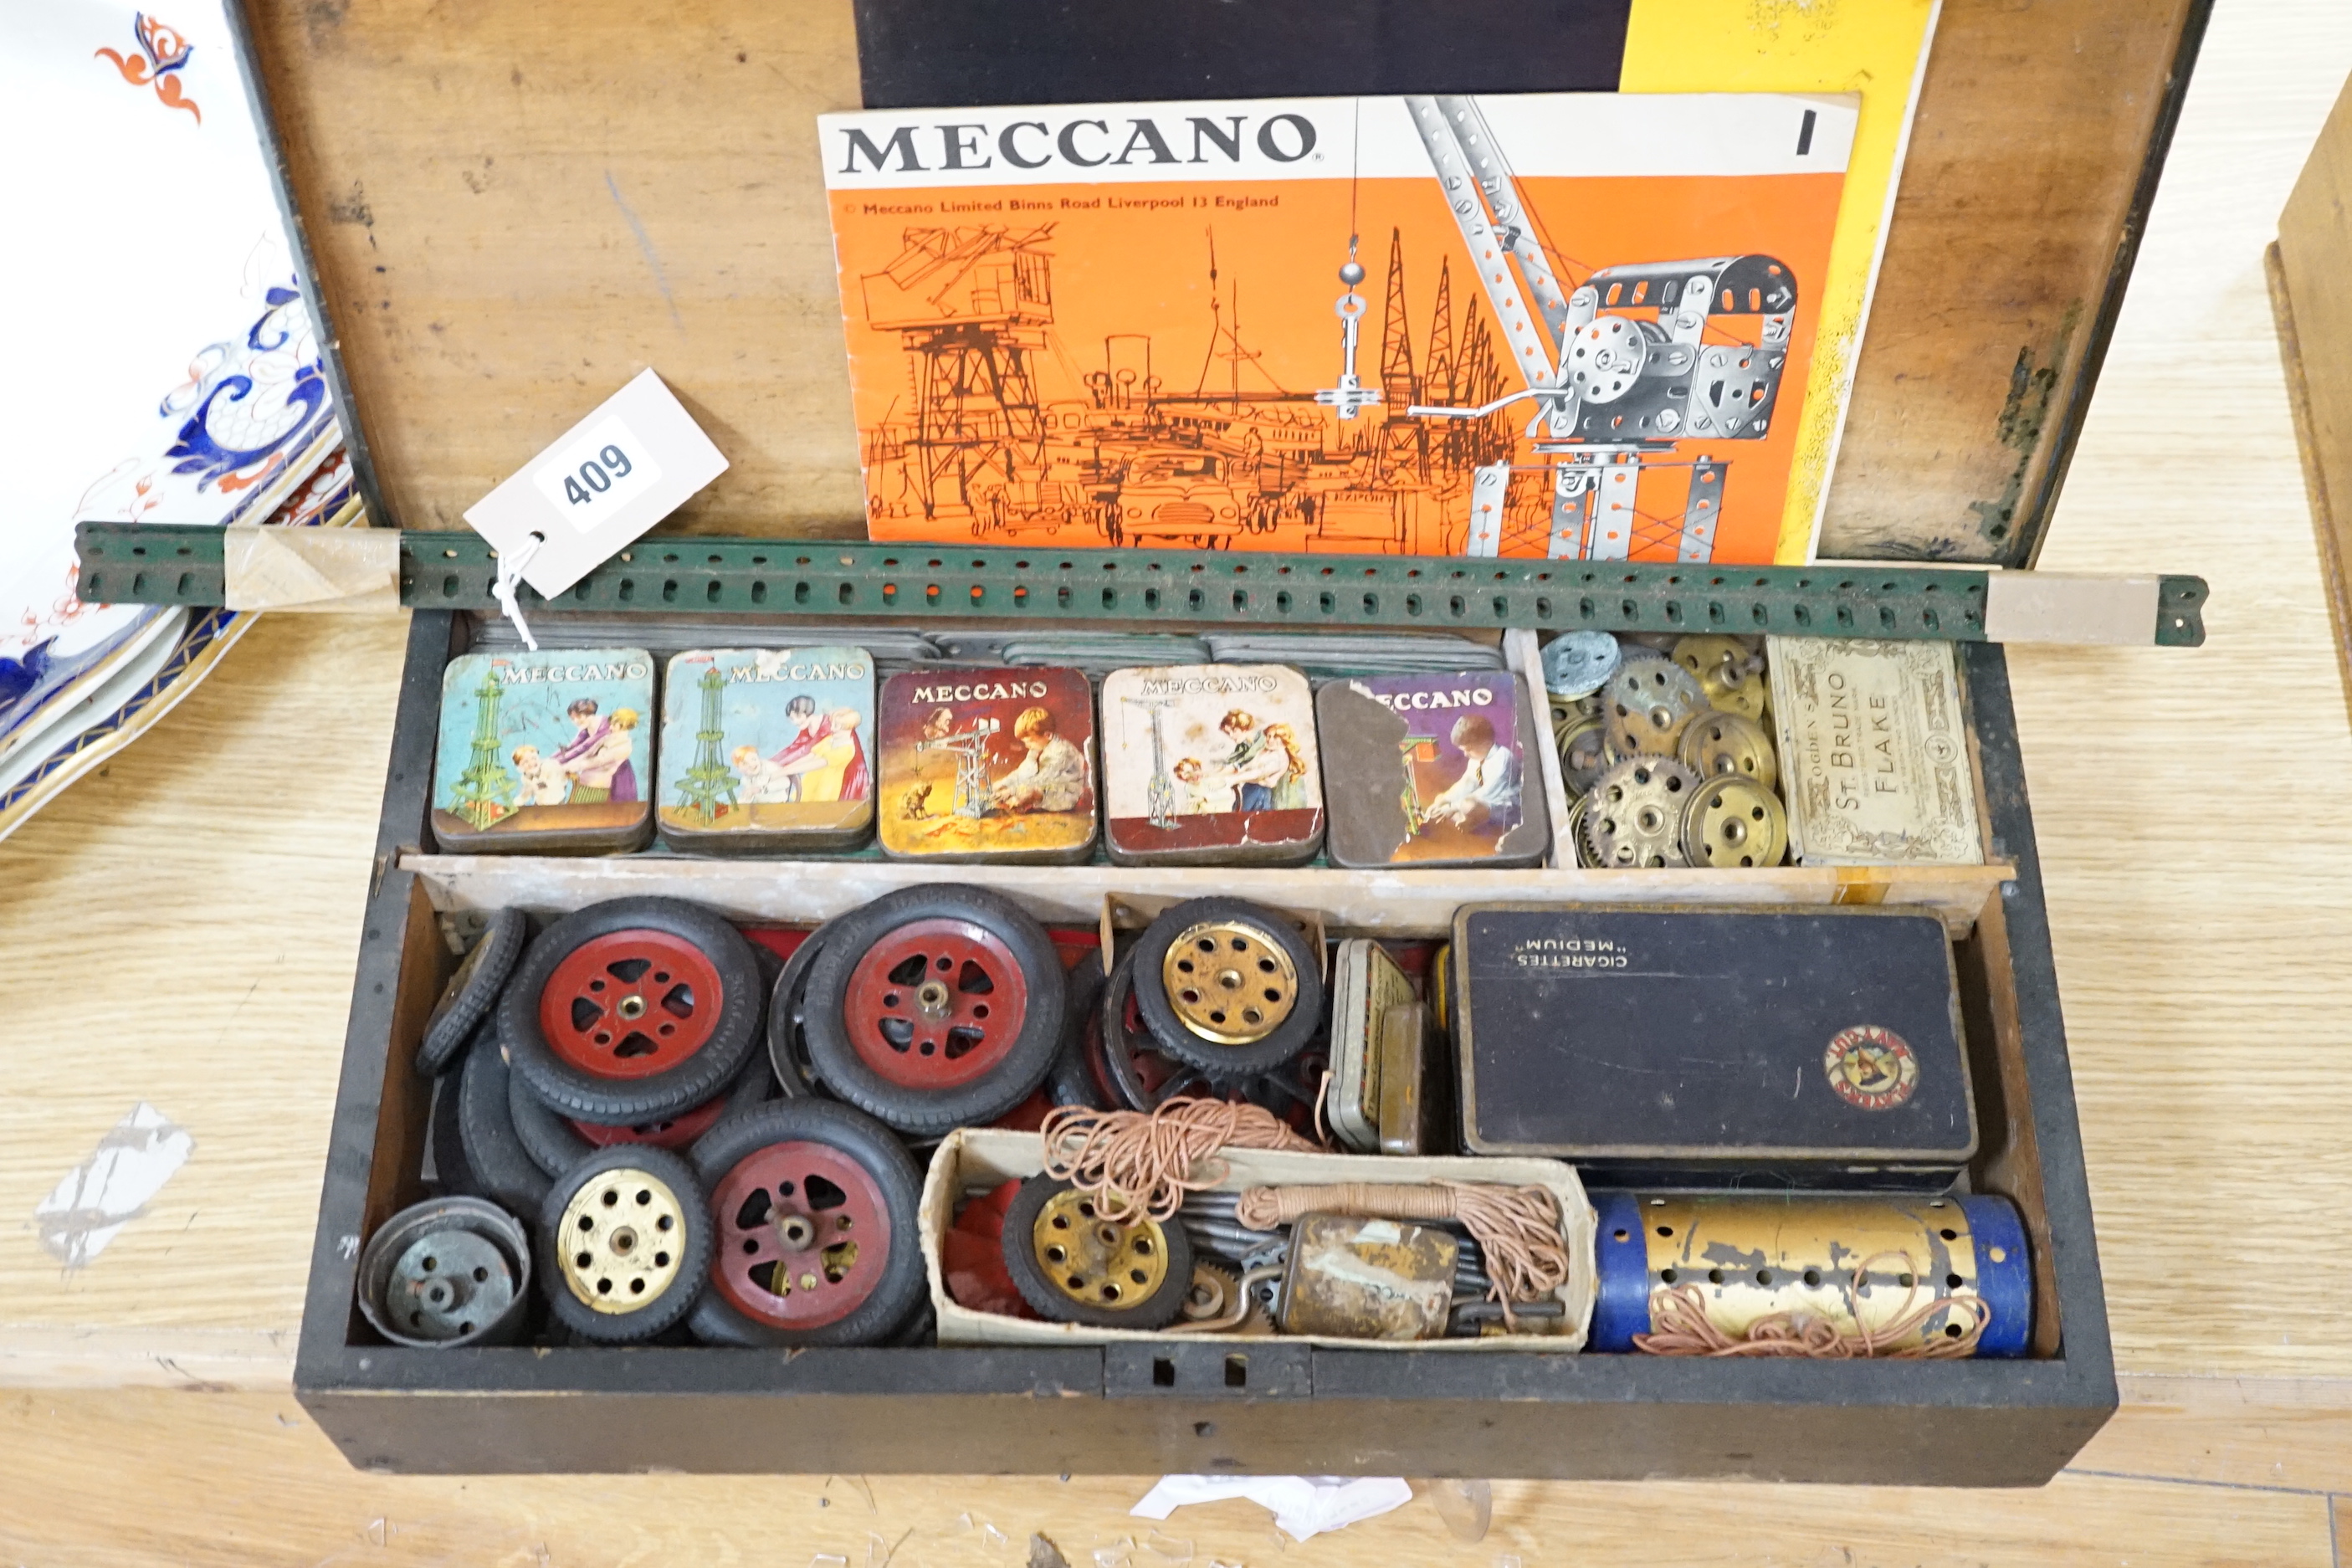 A Meccano collection